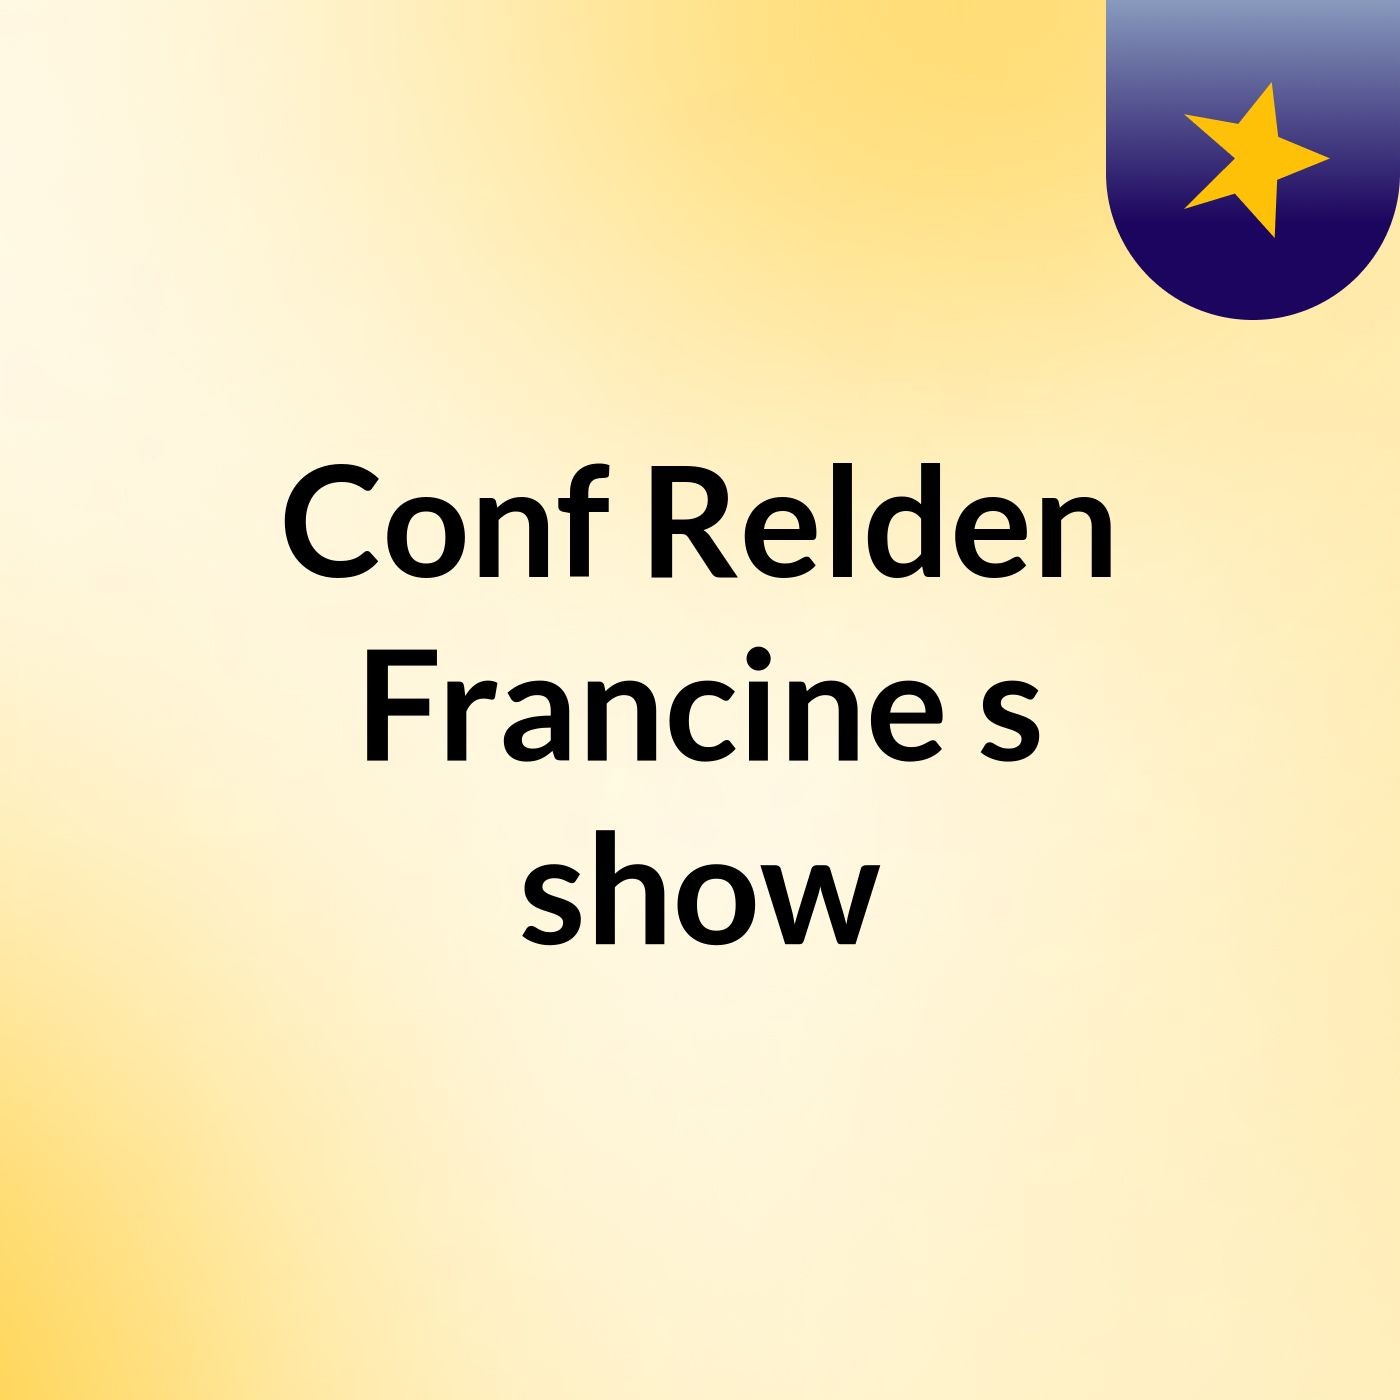 Conf Relden Francine's show